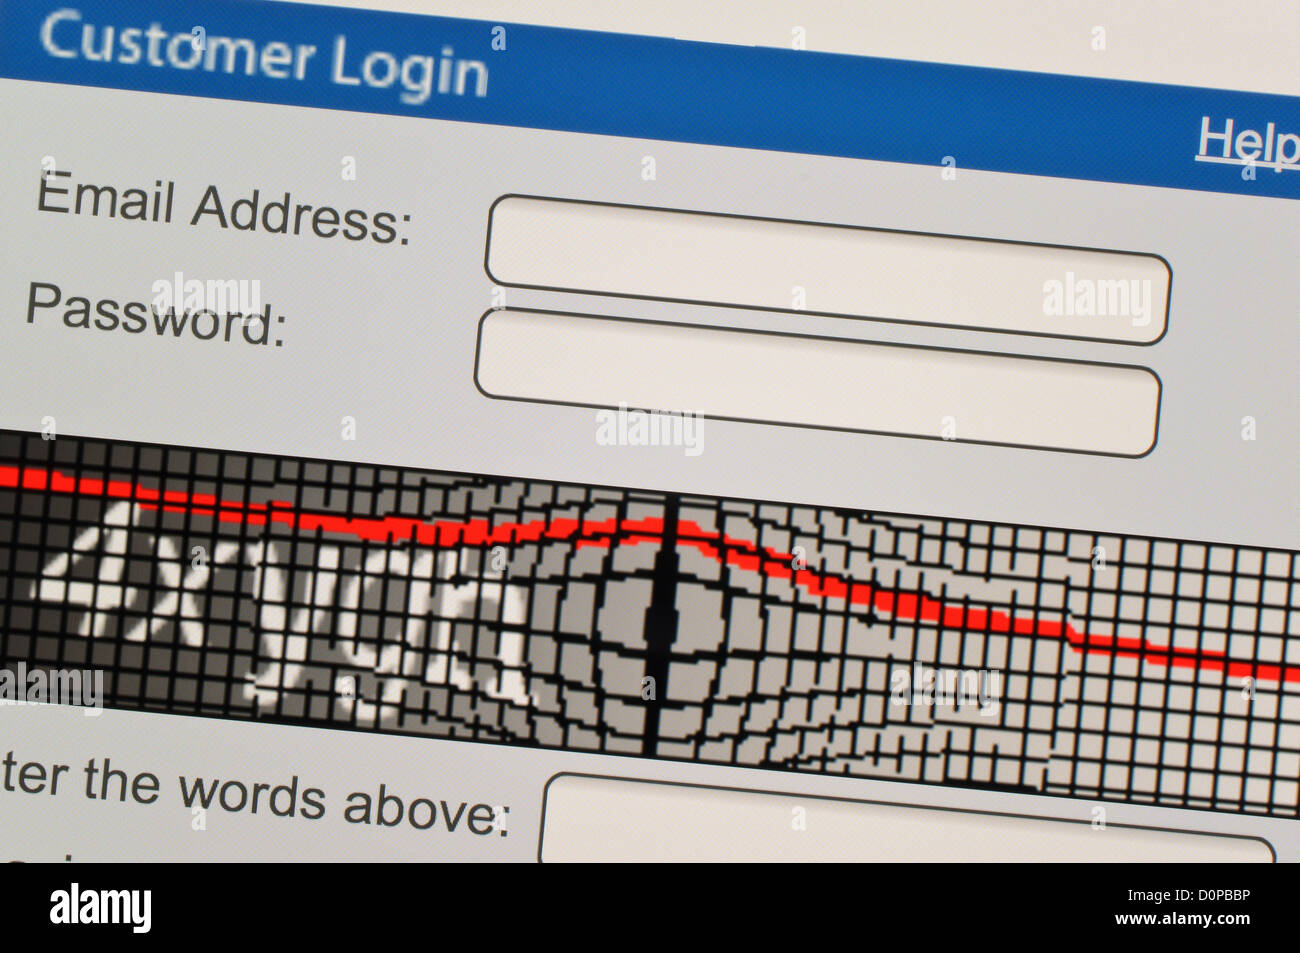 Customer log-in on computer screen Stock Photo